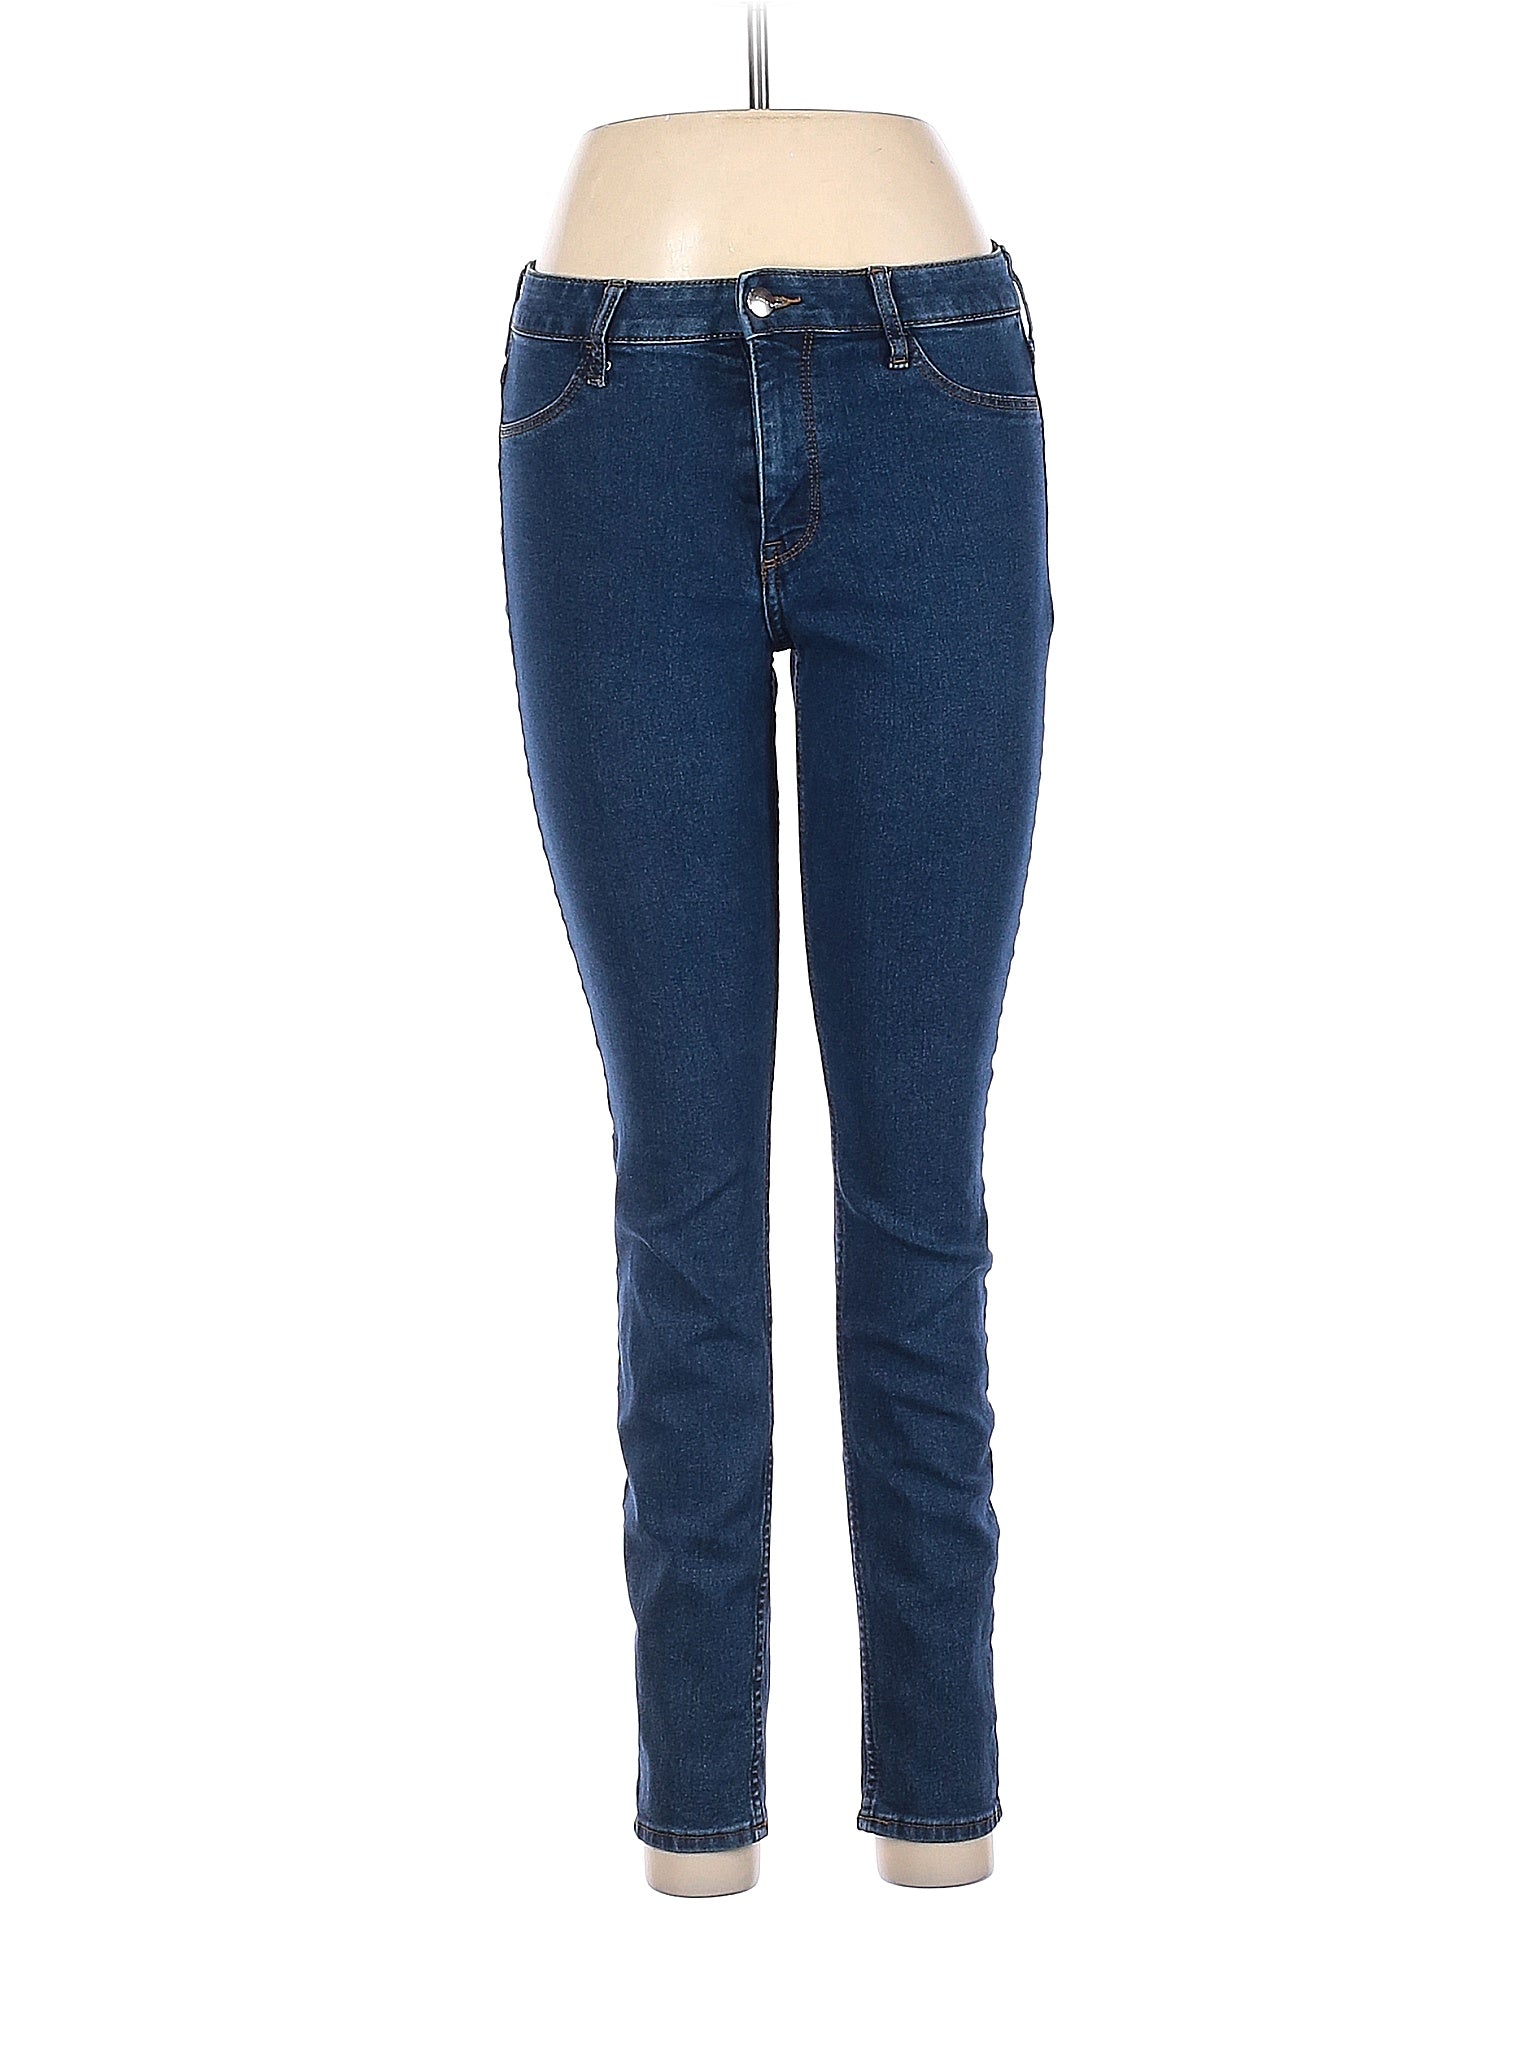 Jeans waist size - 28